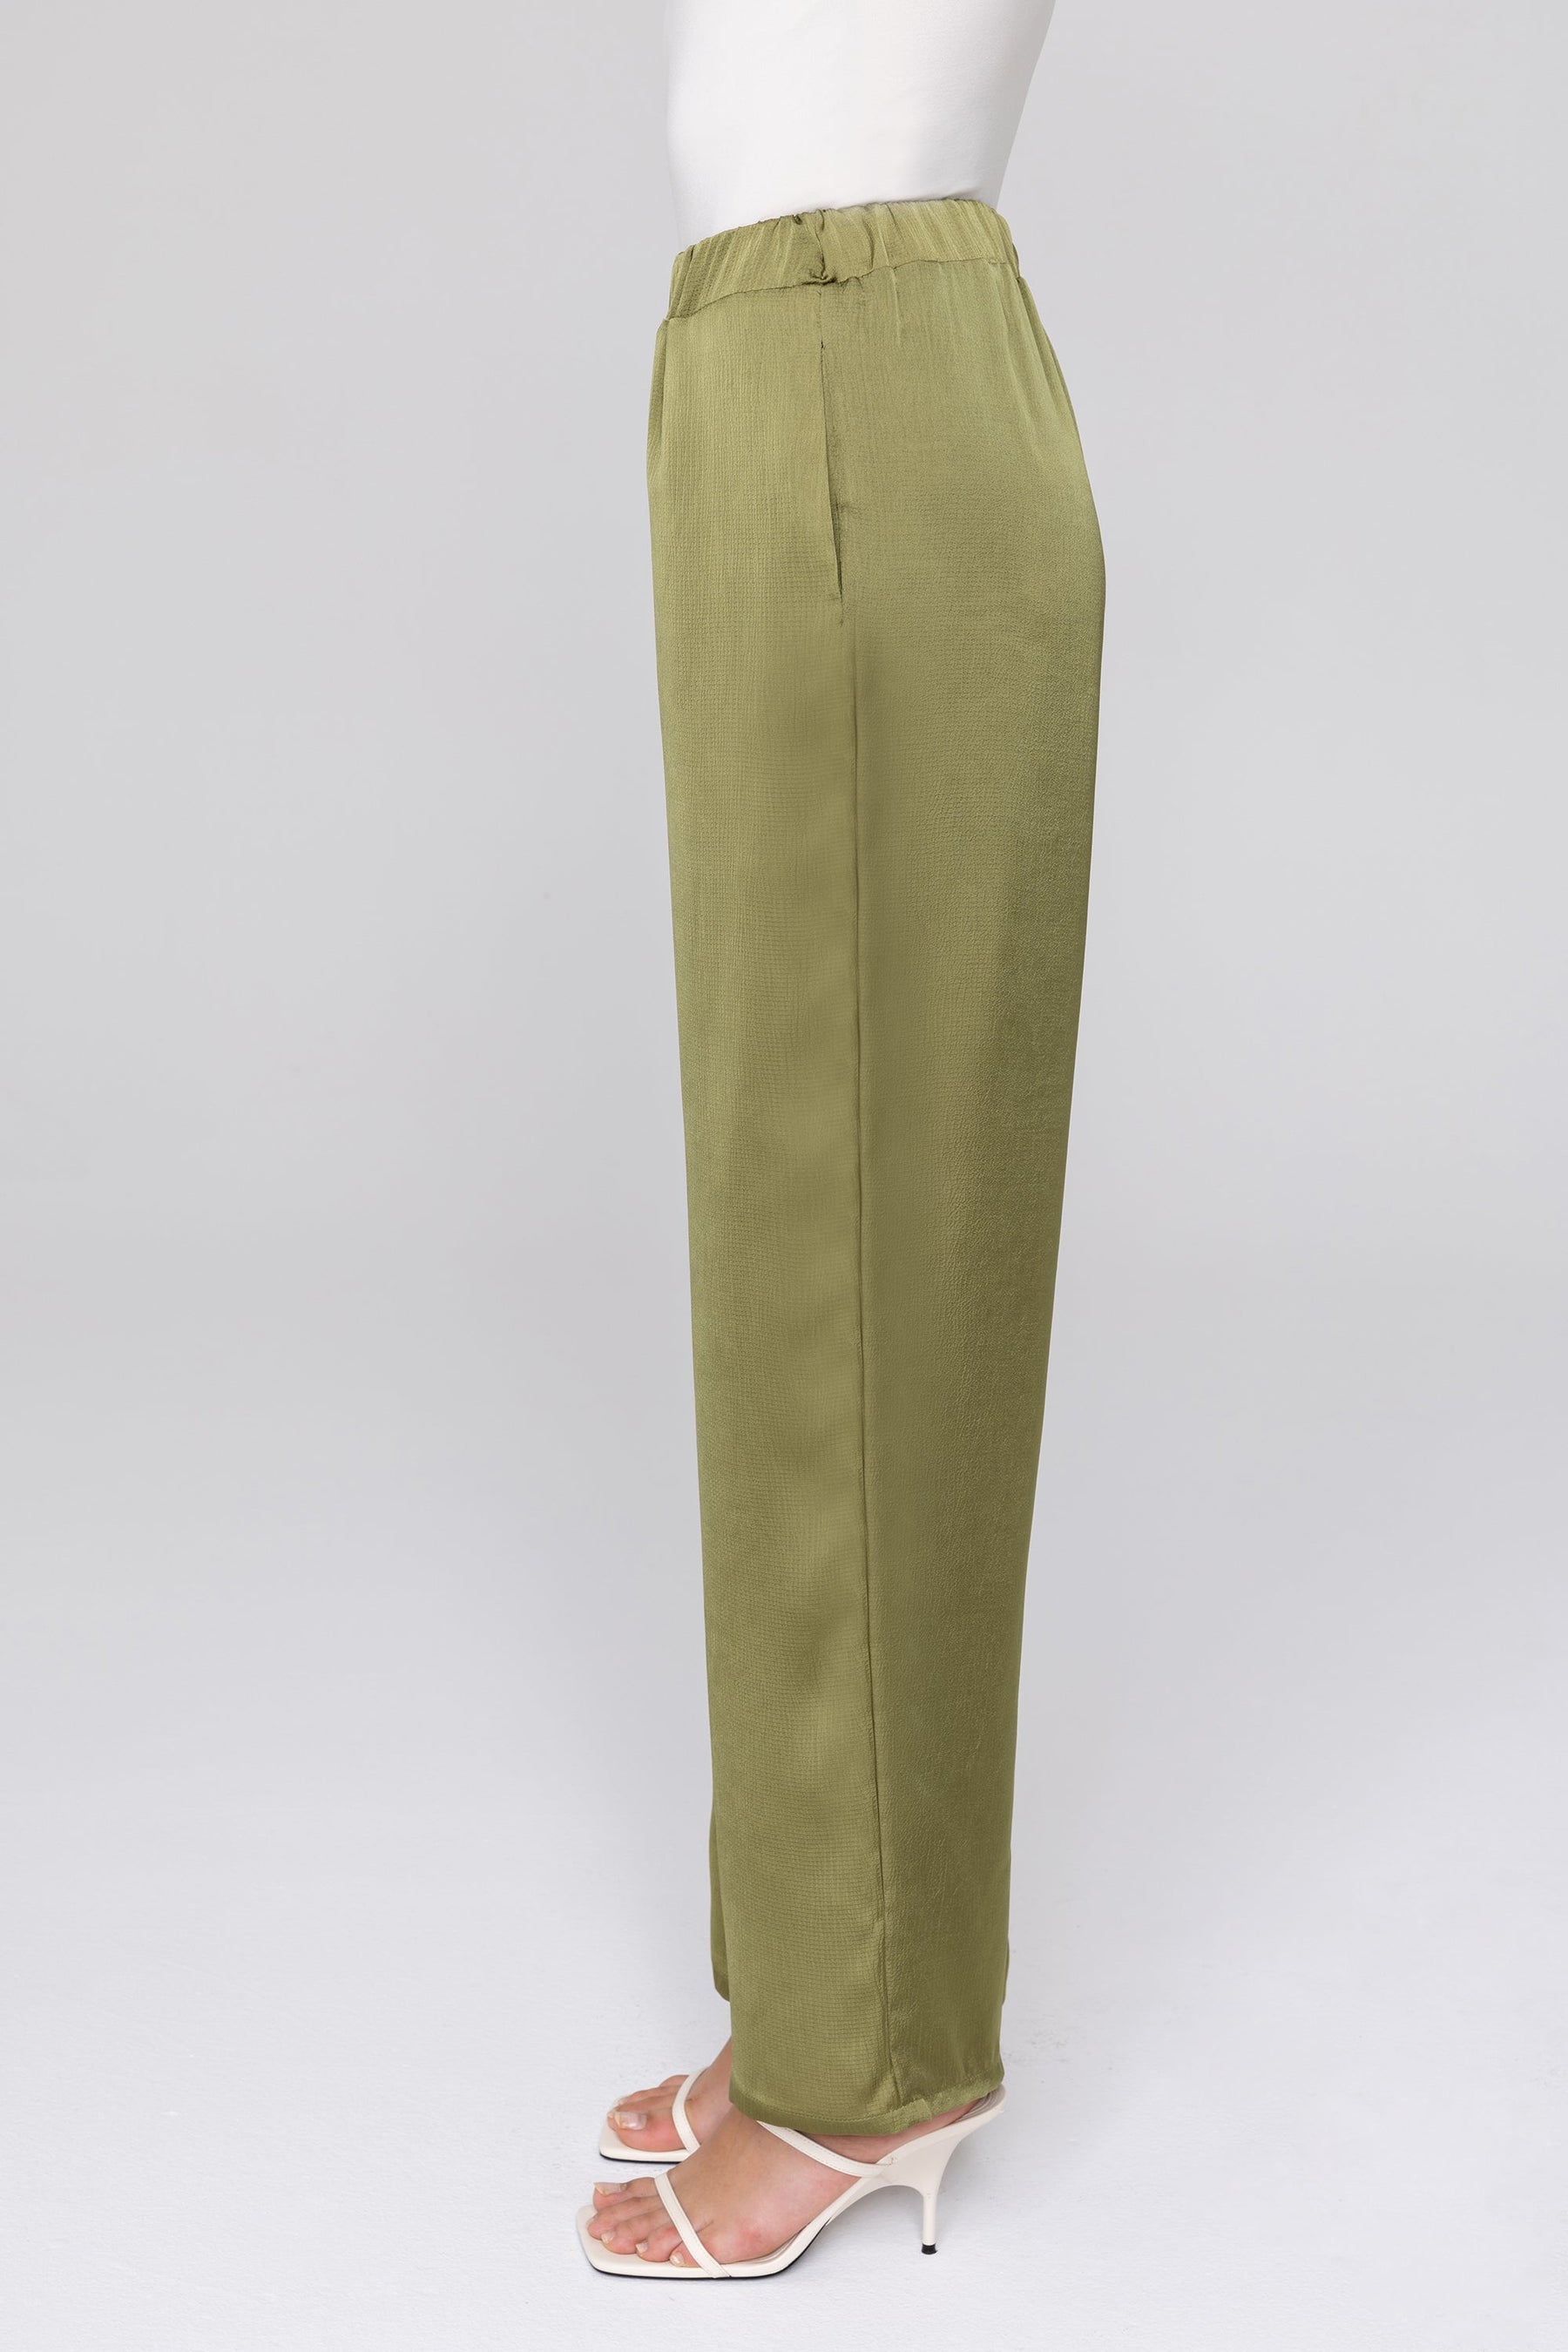 Katia Textured Wide Leg Pants - Avocado Veiled 